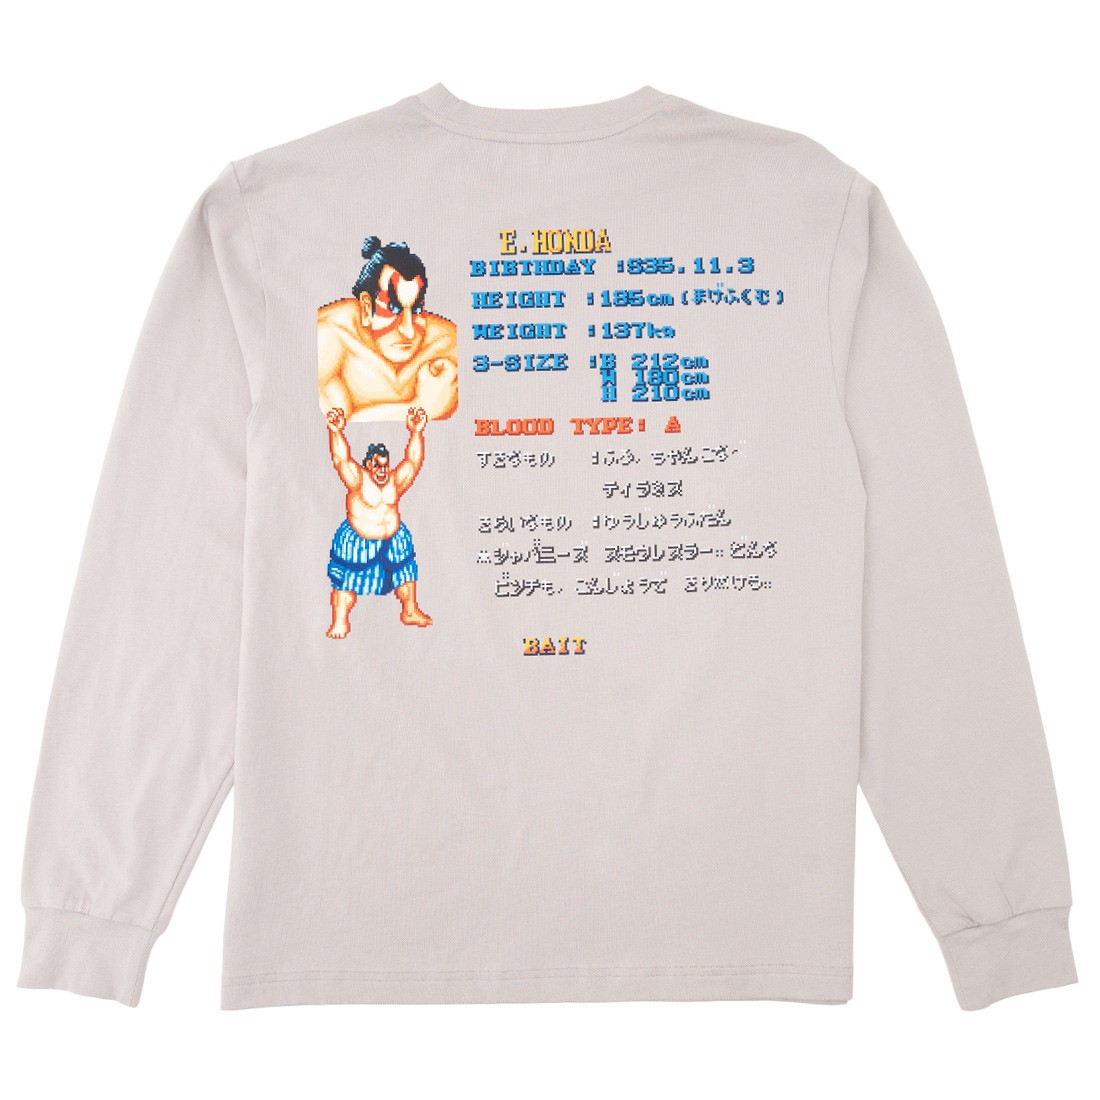 BAIT x Street Fighter Men Select Your Fighter E Honda Long Sleeve Tee (gray)